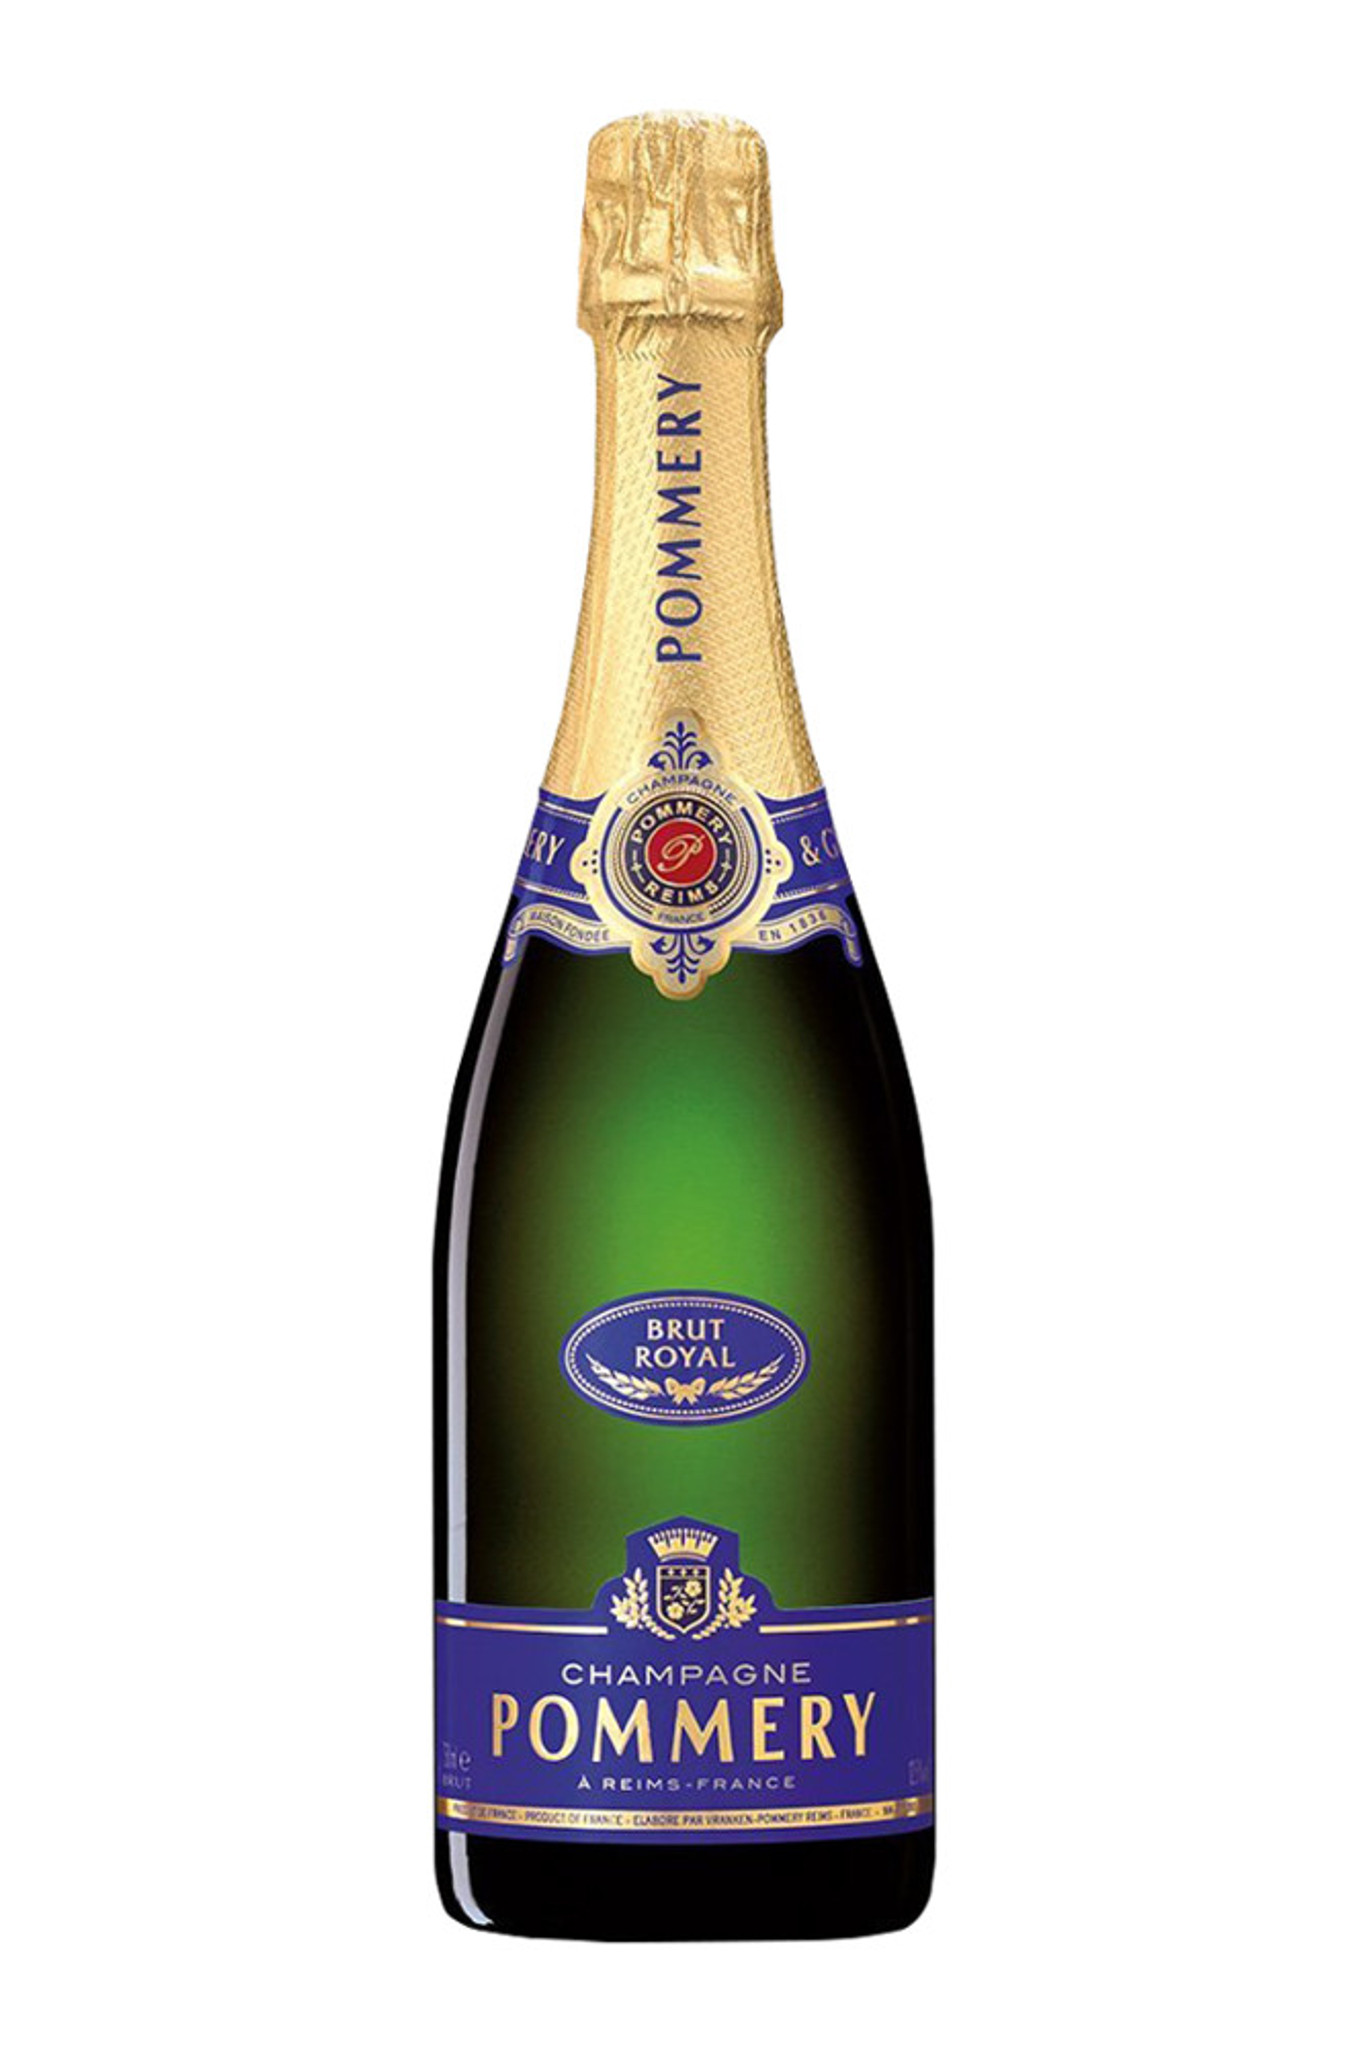 - Premier Royal Pommery Champagne Brut